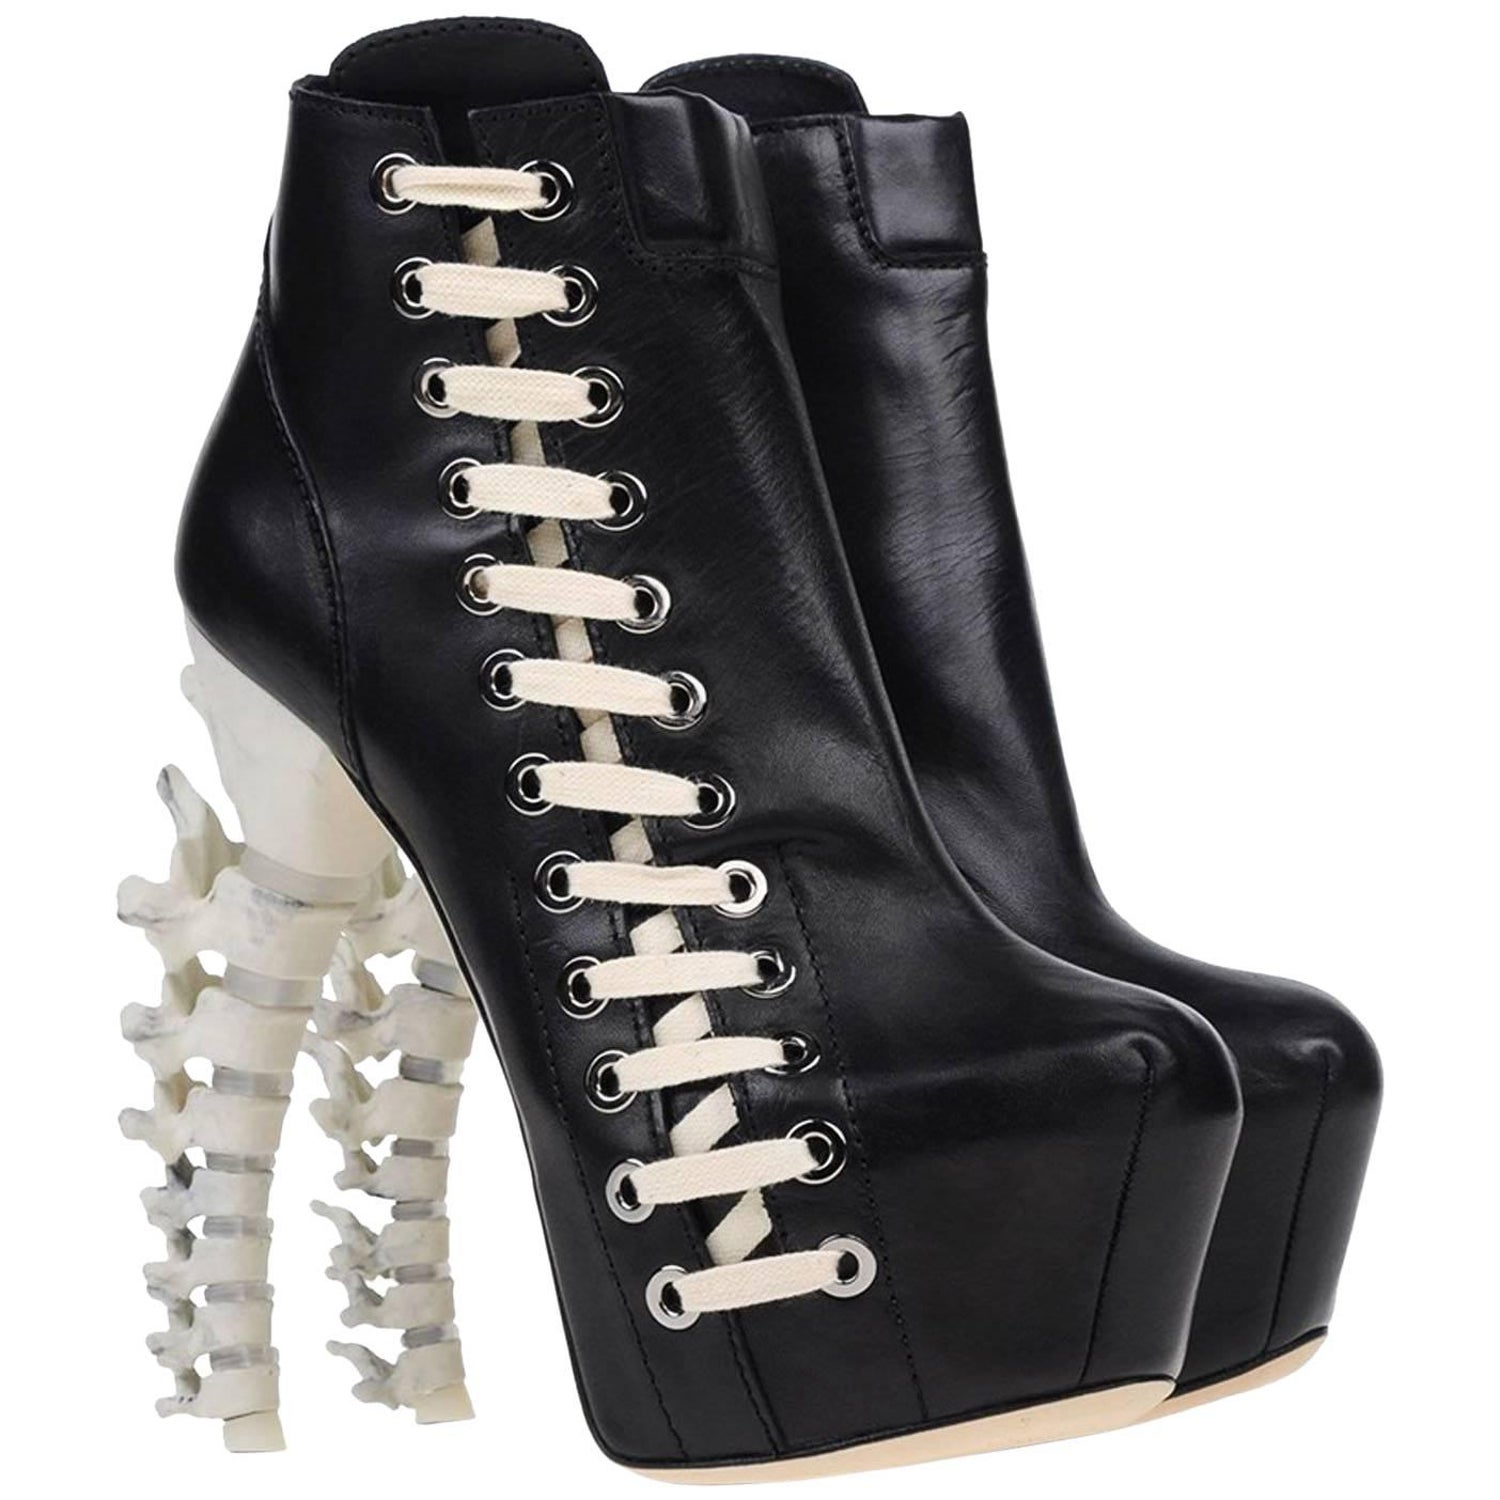 Dsquared Spine - For Sale on 1stDibs | dsquared spine heels, dsquared  skeleton heels, dsquared2 spine heels